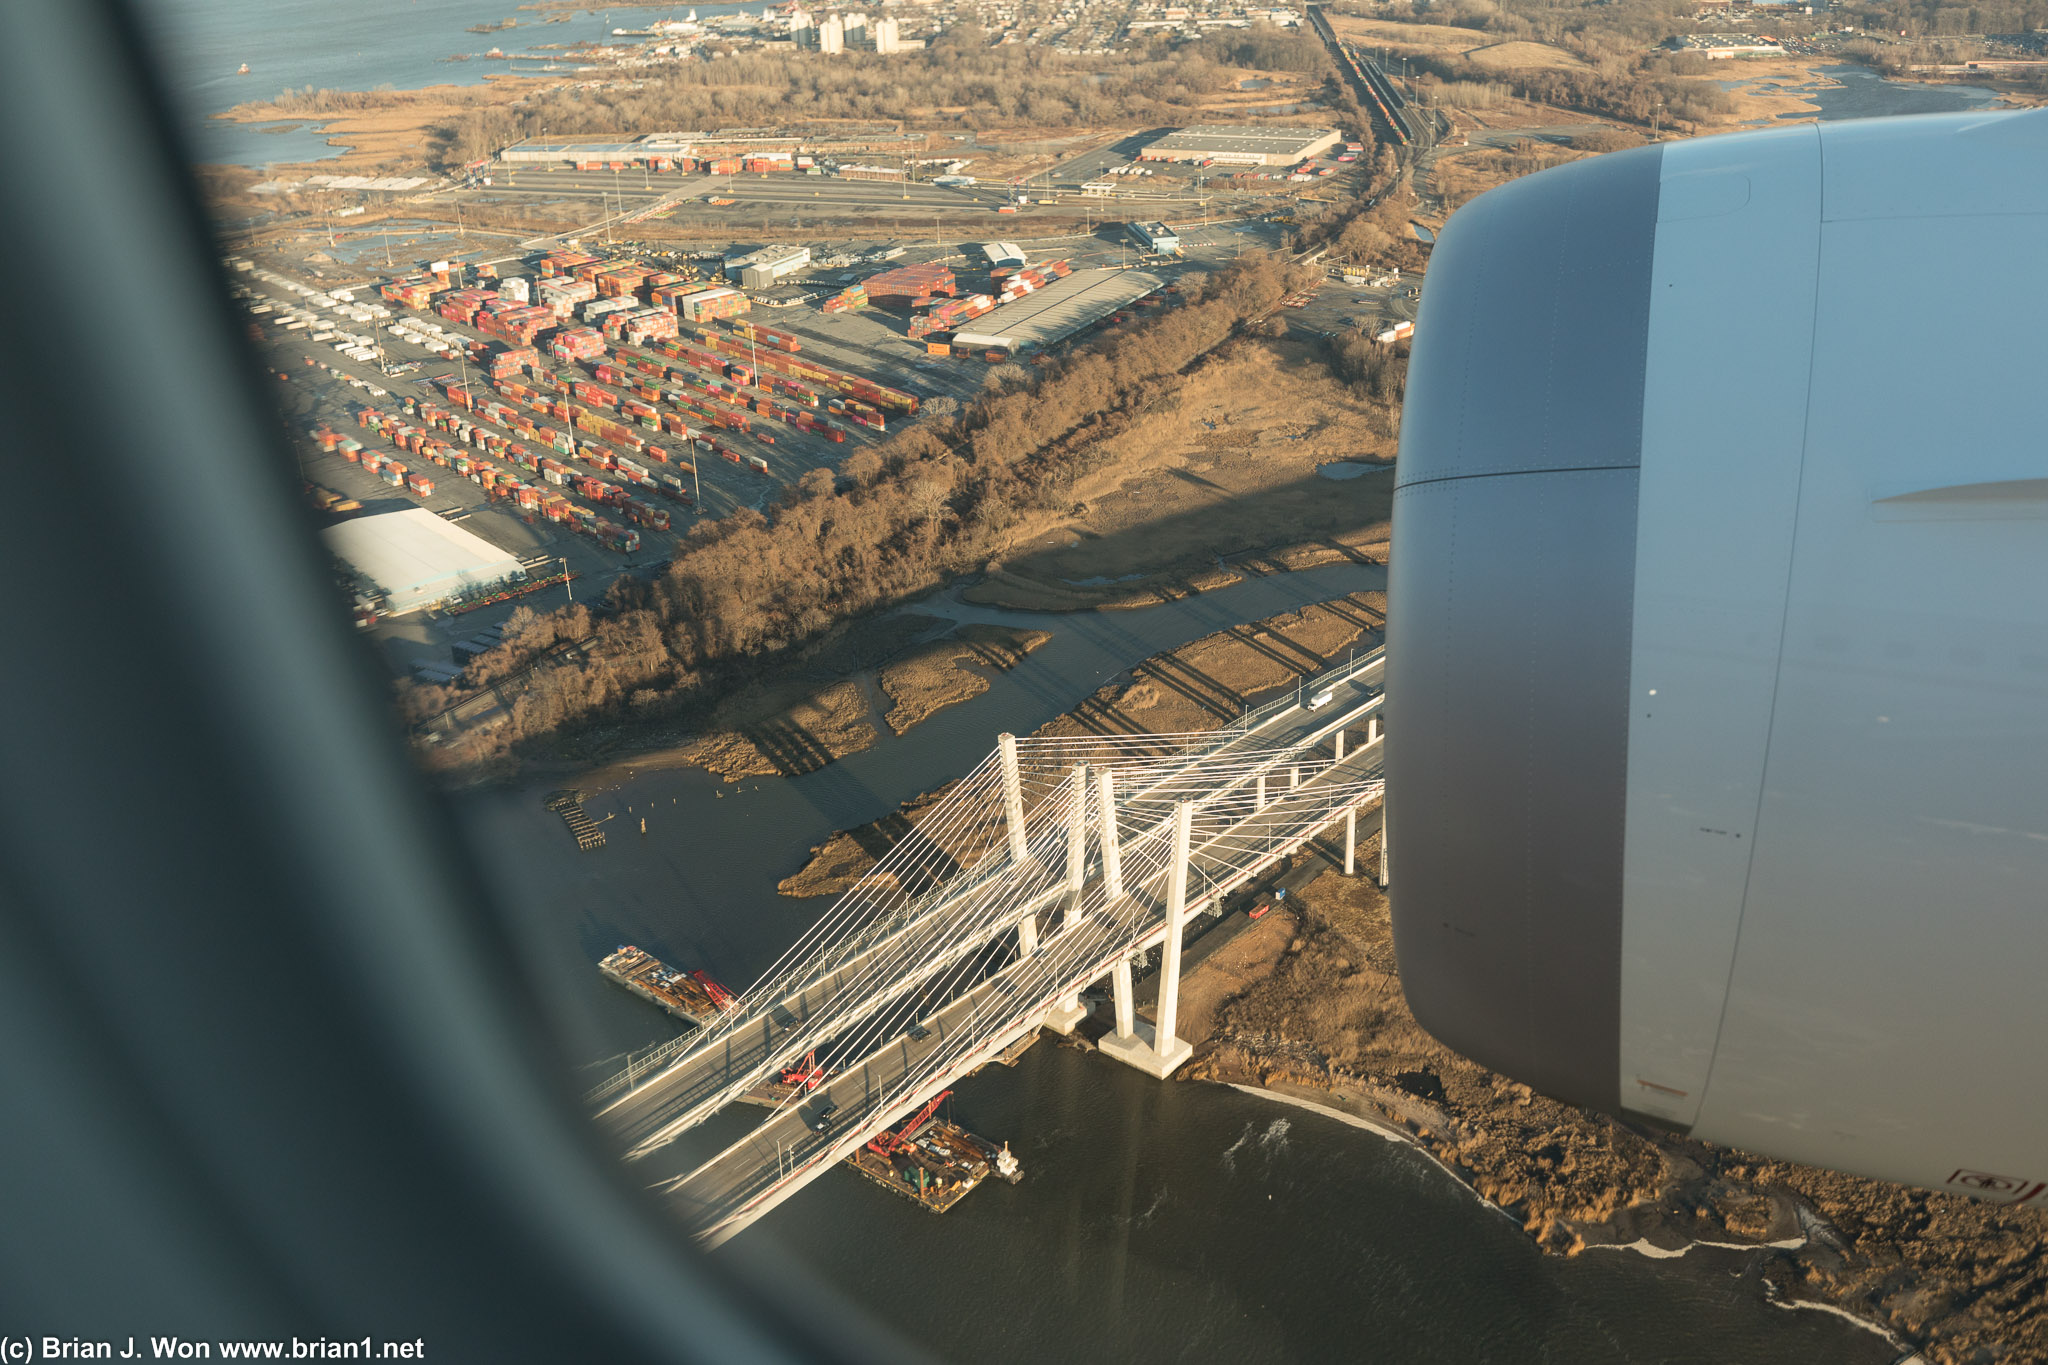 New Goethals Bridge bridge, connecting New Jersey and Staten Island, New York.